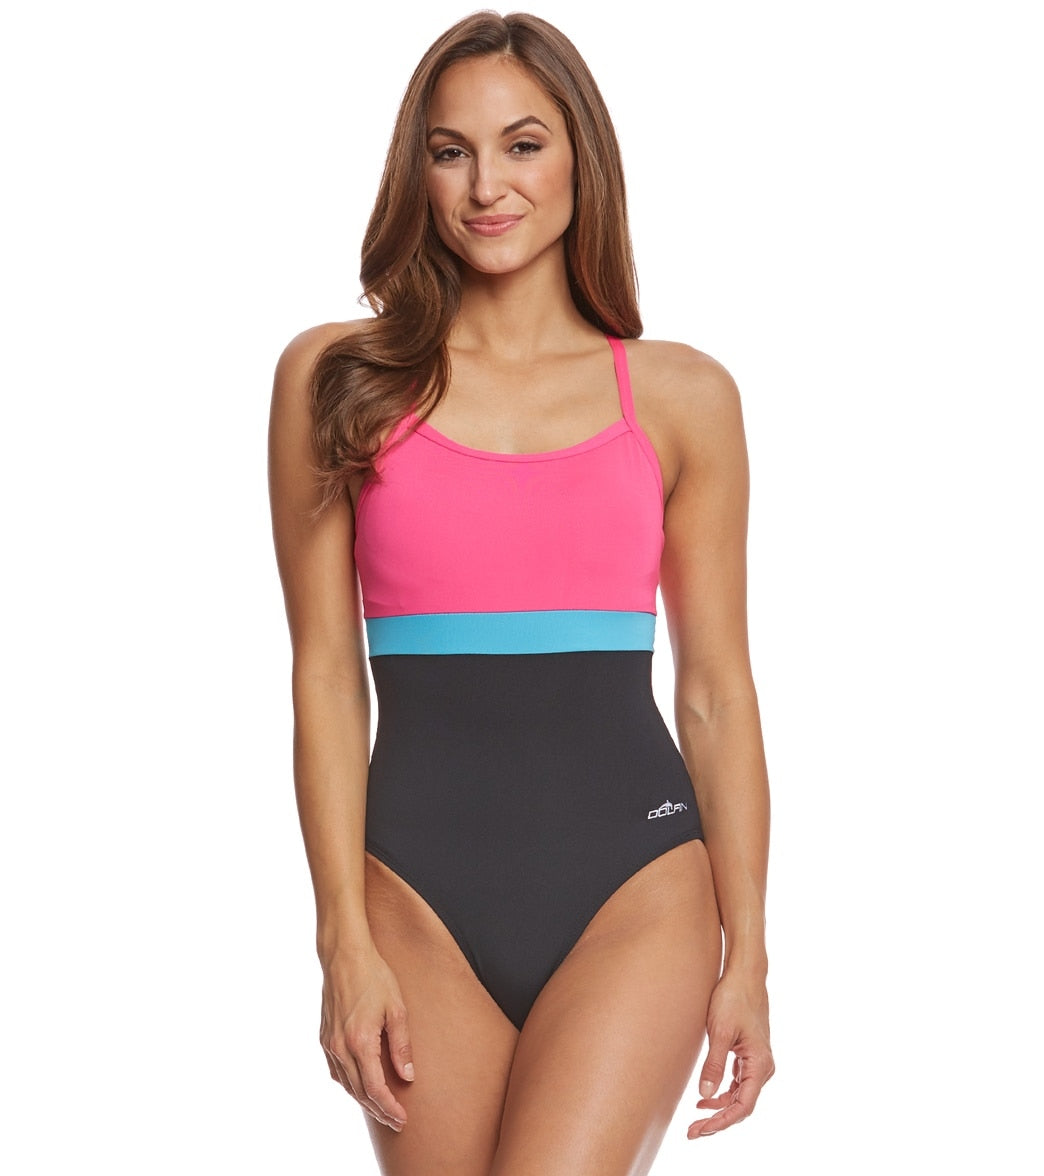 Dolfin Aquashape Women's Cross Back Chlorine Resistant One Piece Swimsuit - Black/Pink/Turquoise 6 Polyester/Spandex - Swimoutlet.com